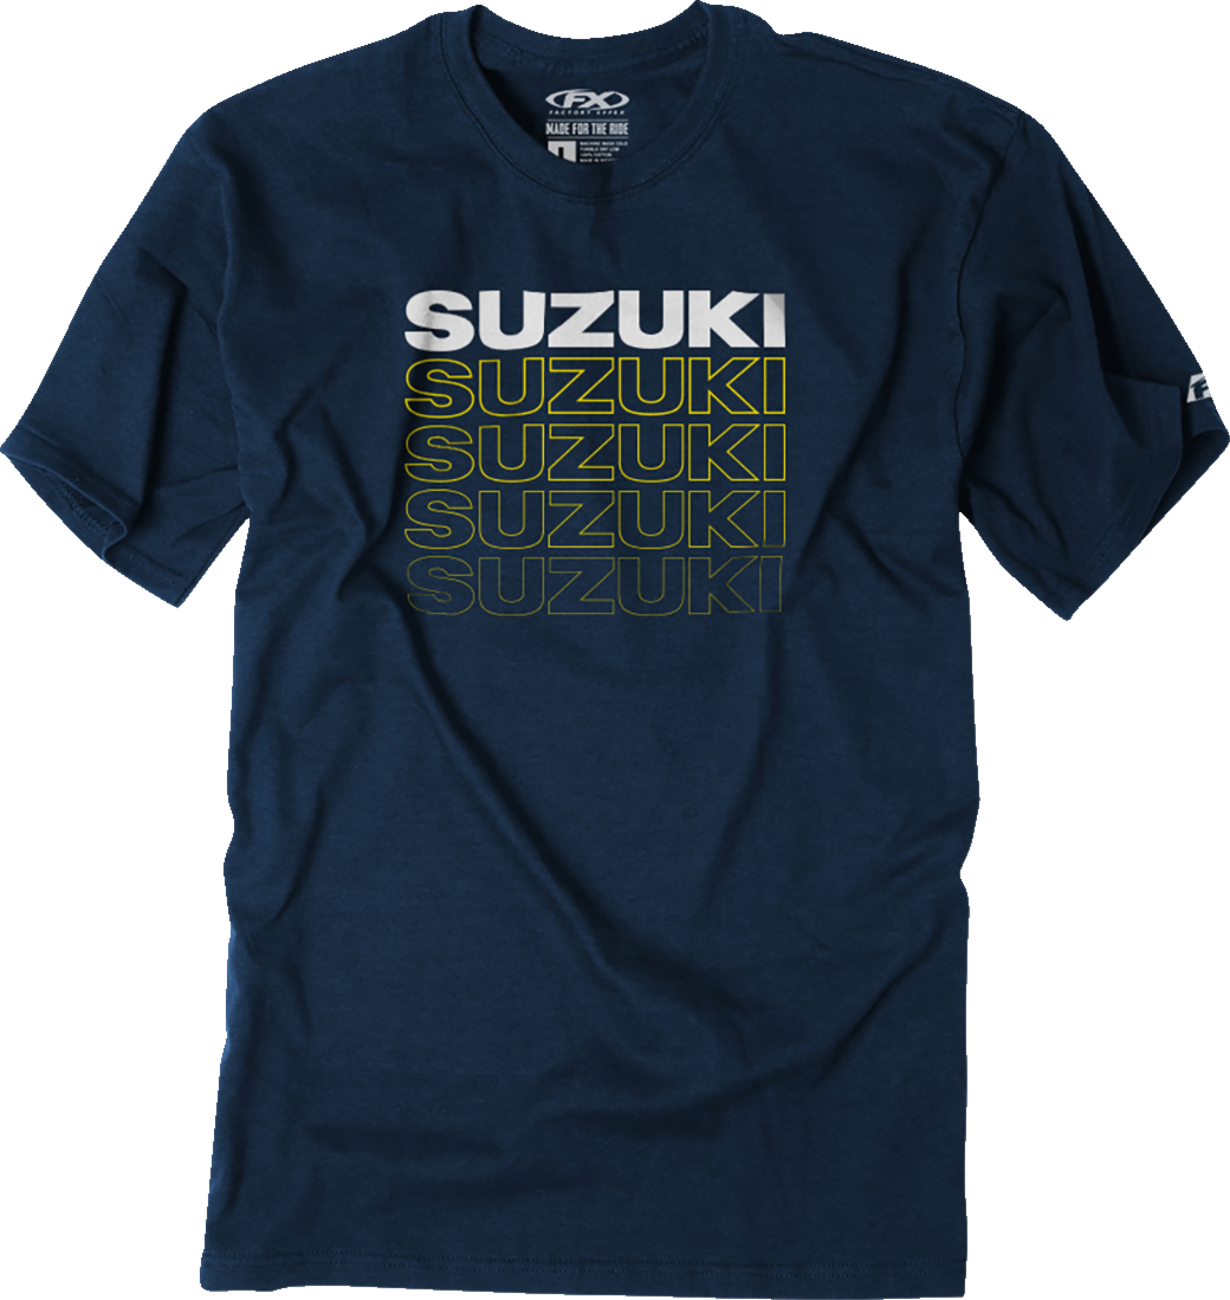 FACTORY EFFEX Suzuki Repeat T-Shirt - Heather Navy - Medium 27-87422